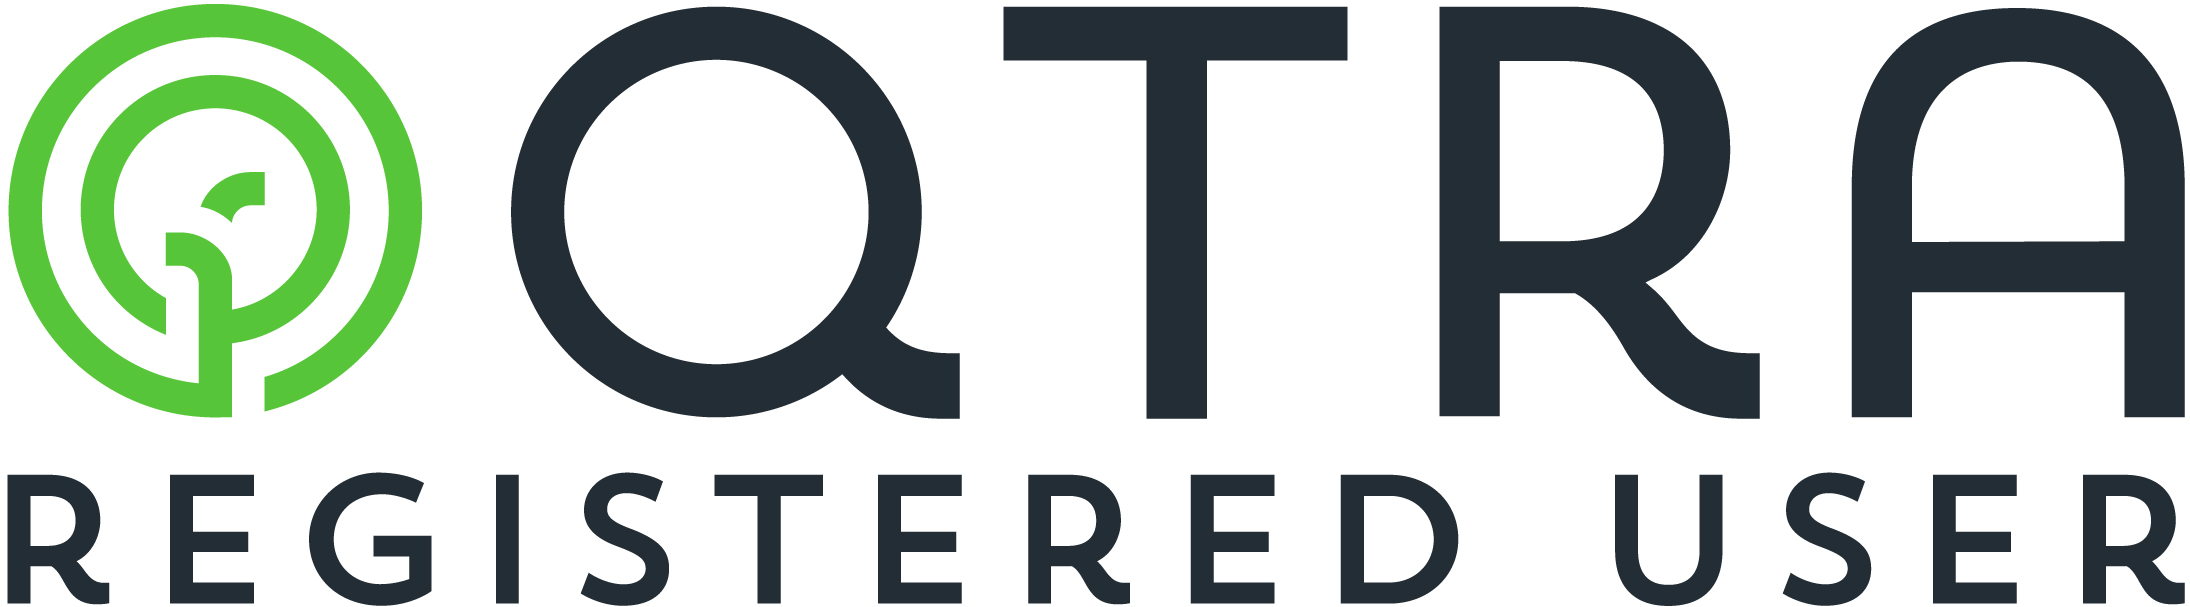 qtra-registered-user-horiz